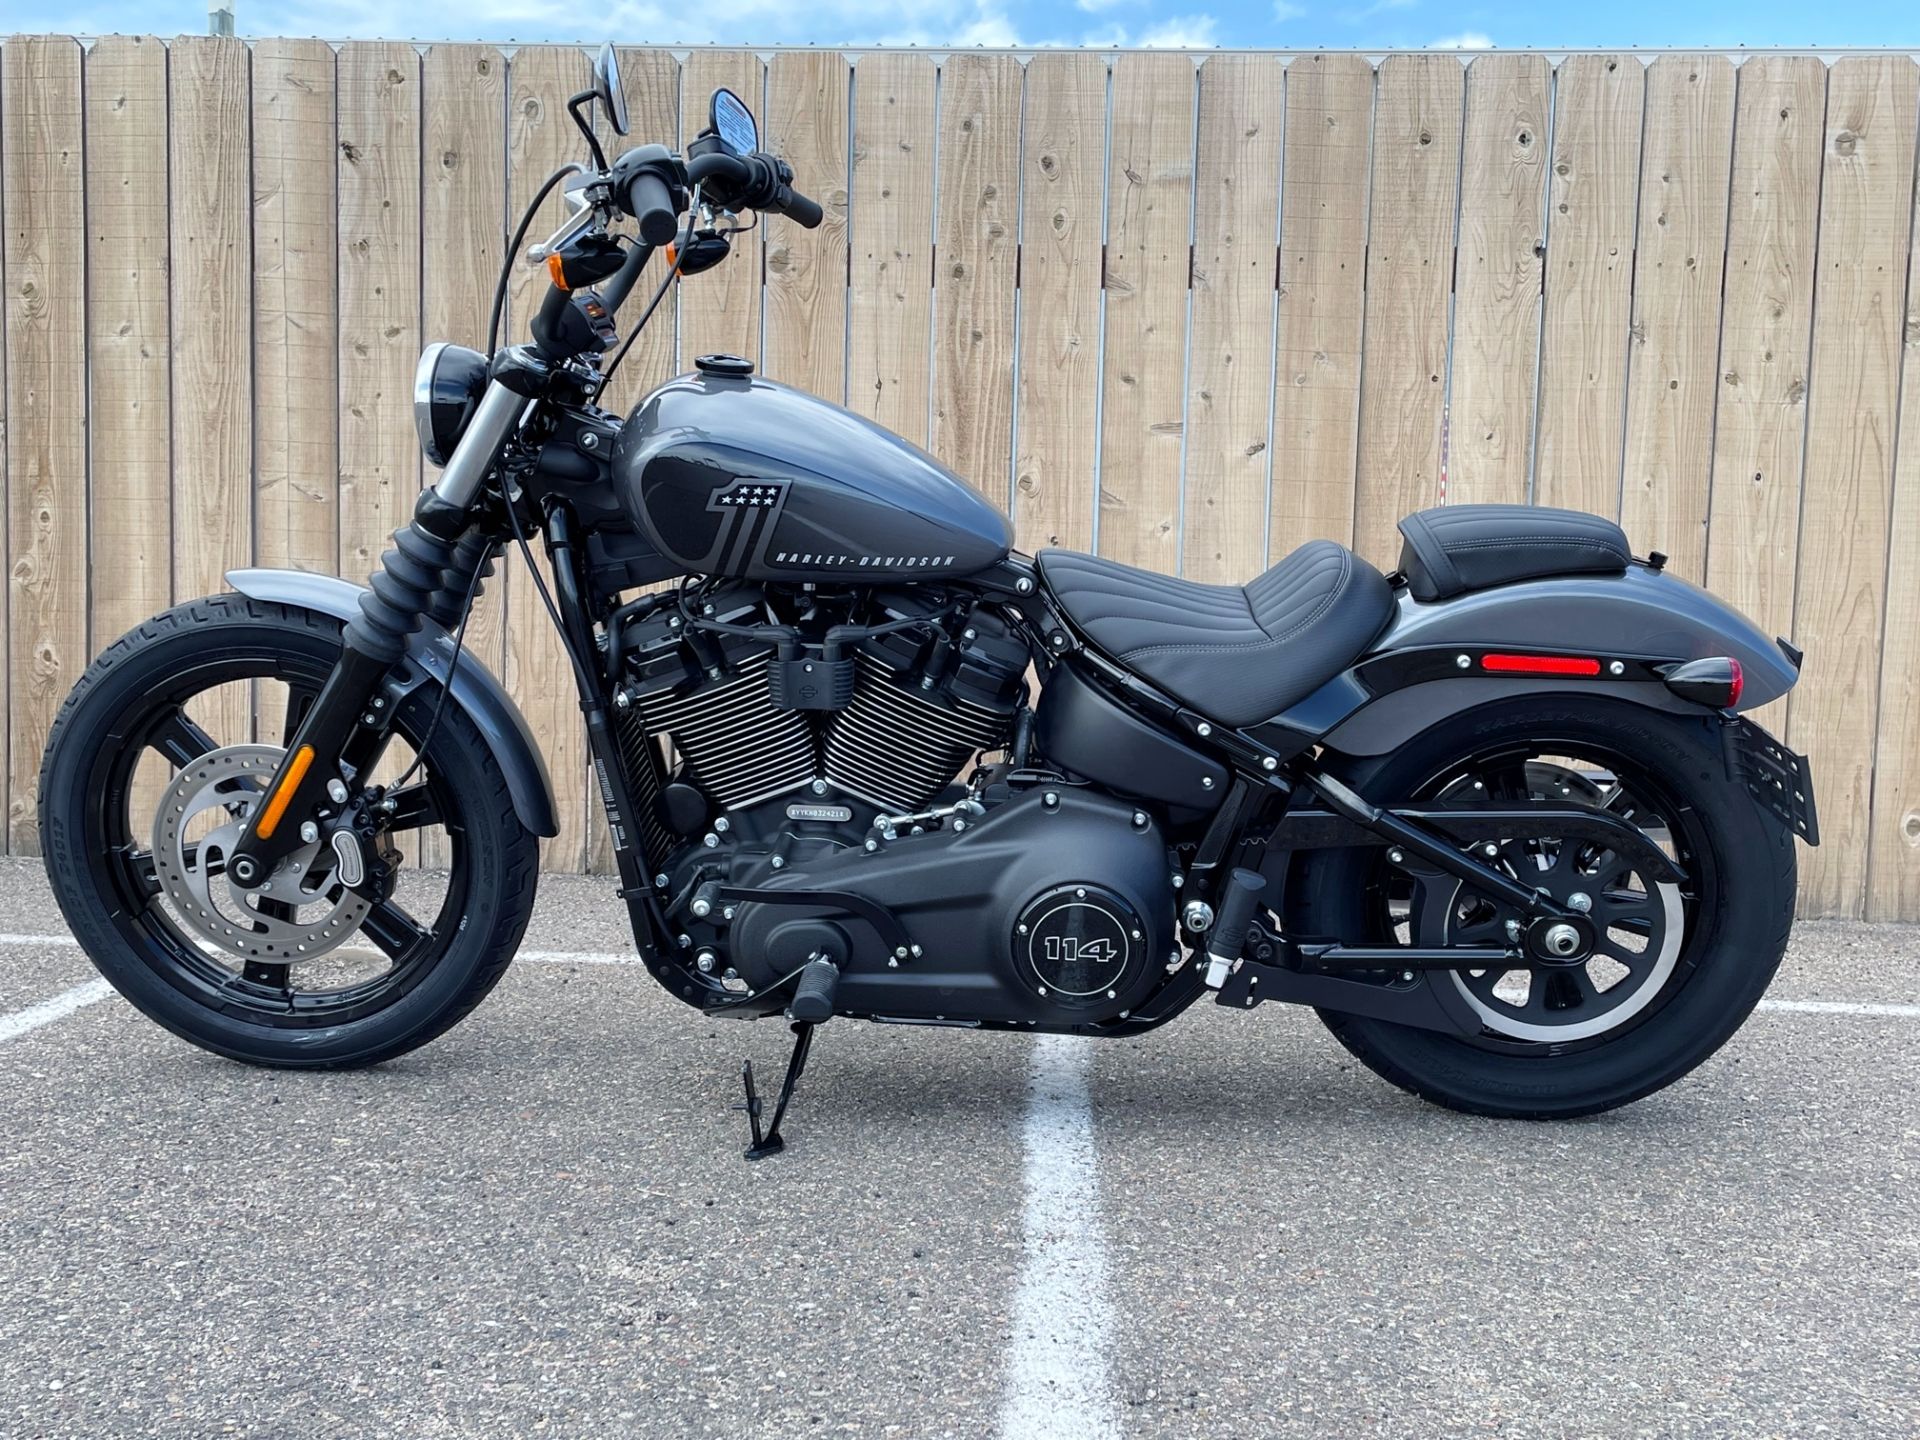 2022 Harley-Davidson Street Bob® 114 in Dodge City, Kansas - Photo 5